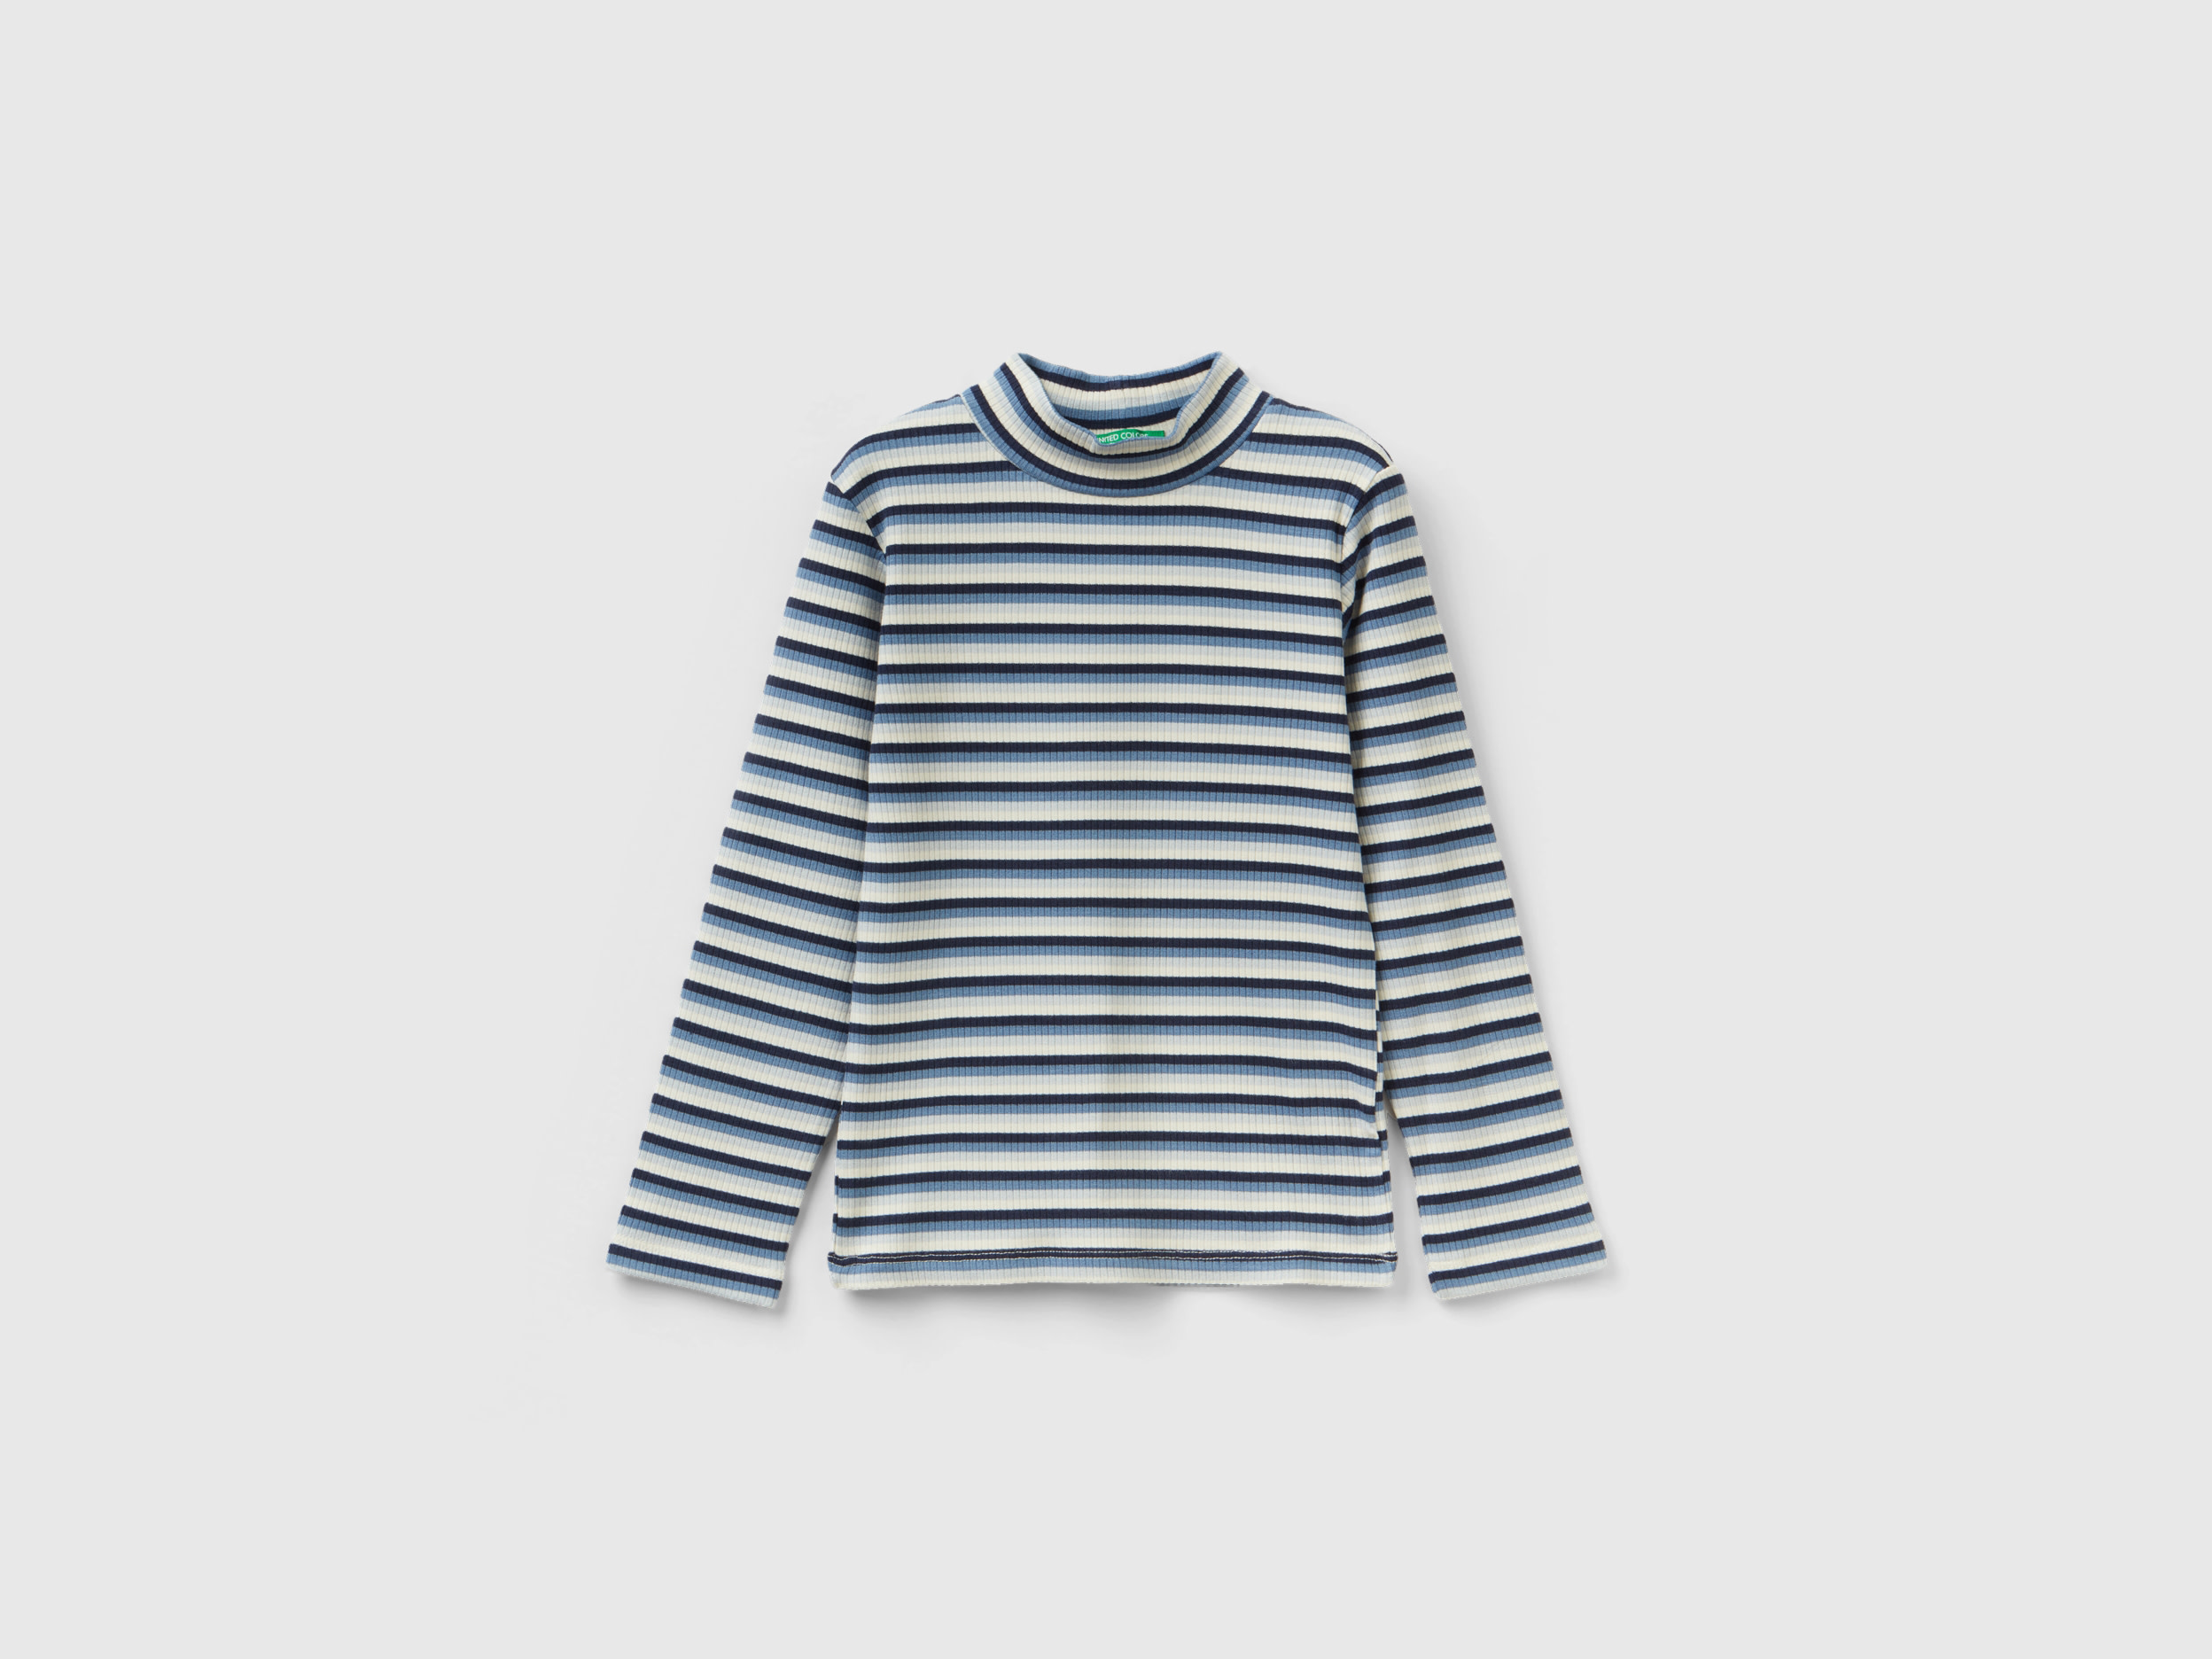 Benetton, Striped Turtleneck T-shirt, size 12-18, Multi-color, Kids